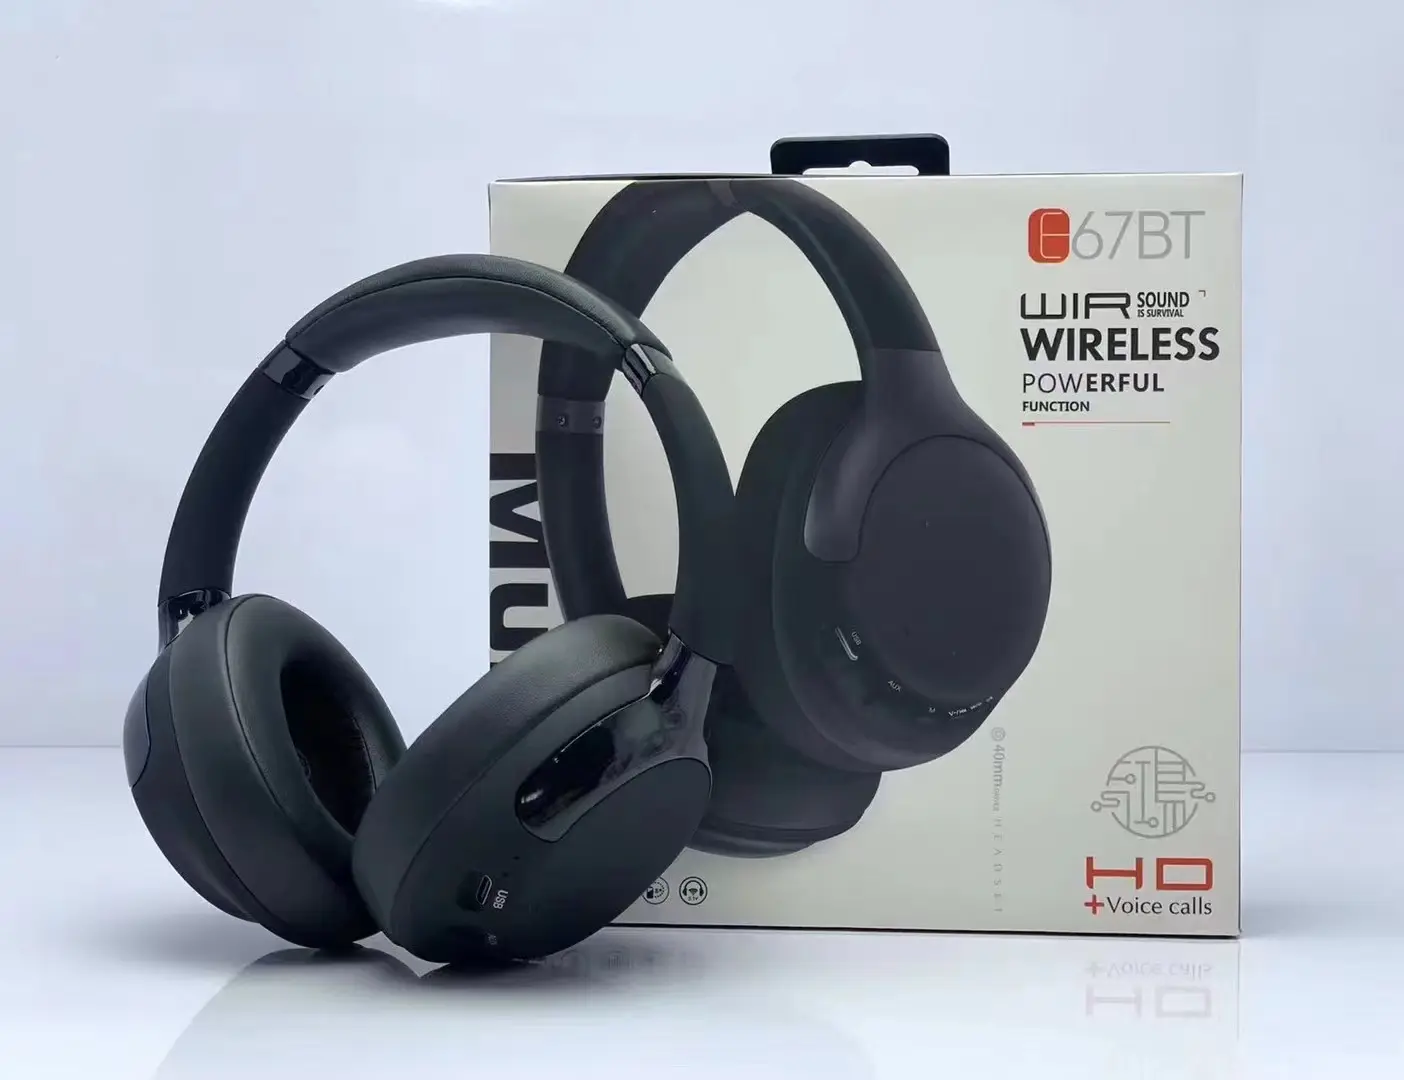 Huoyin-auriculares inalámbricos plegables con Bluetooth, audífonos de música estéreo con sonido envolvente 3D de 40mm, 67